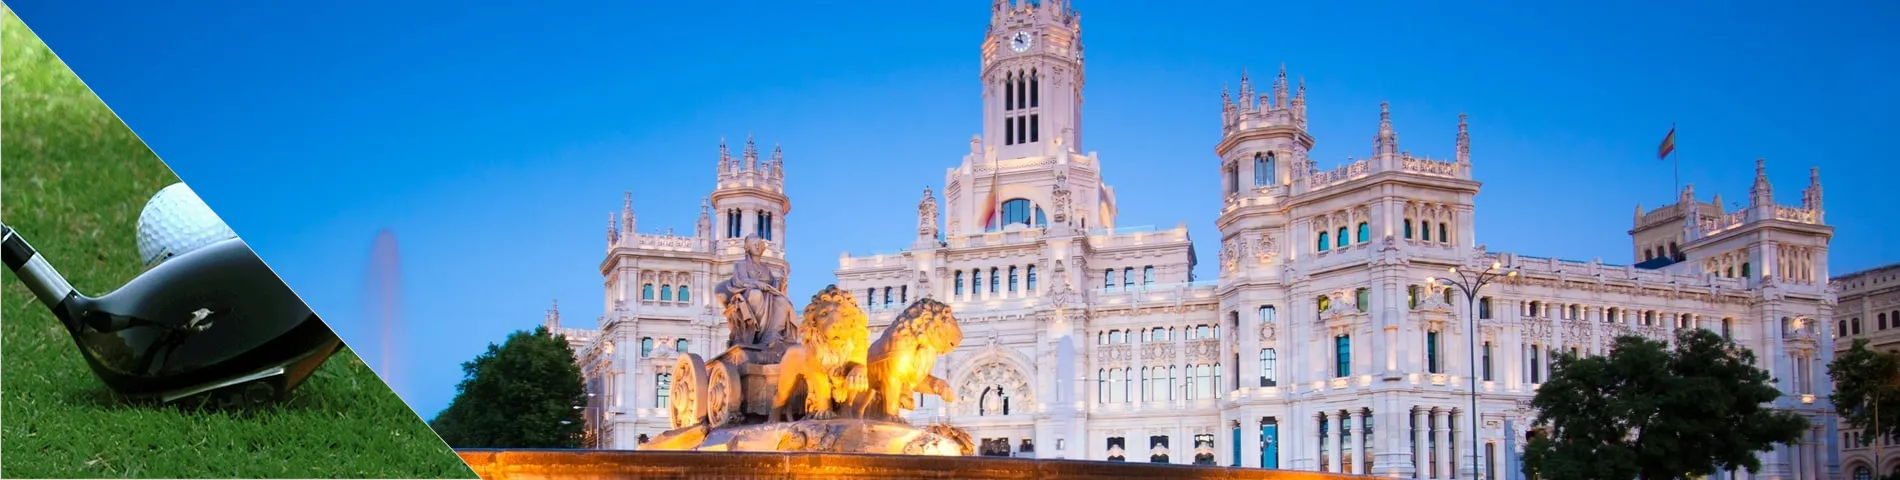 Madrid - Spagnolo & Golf